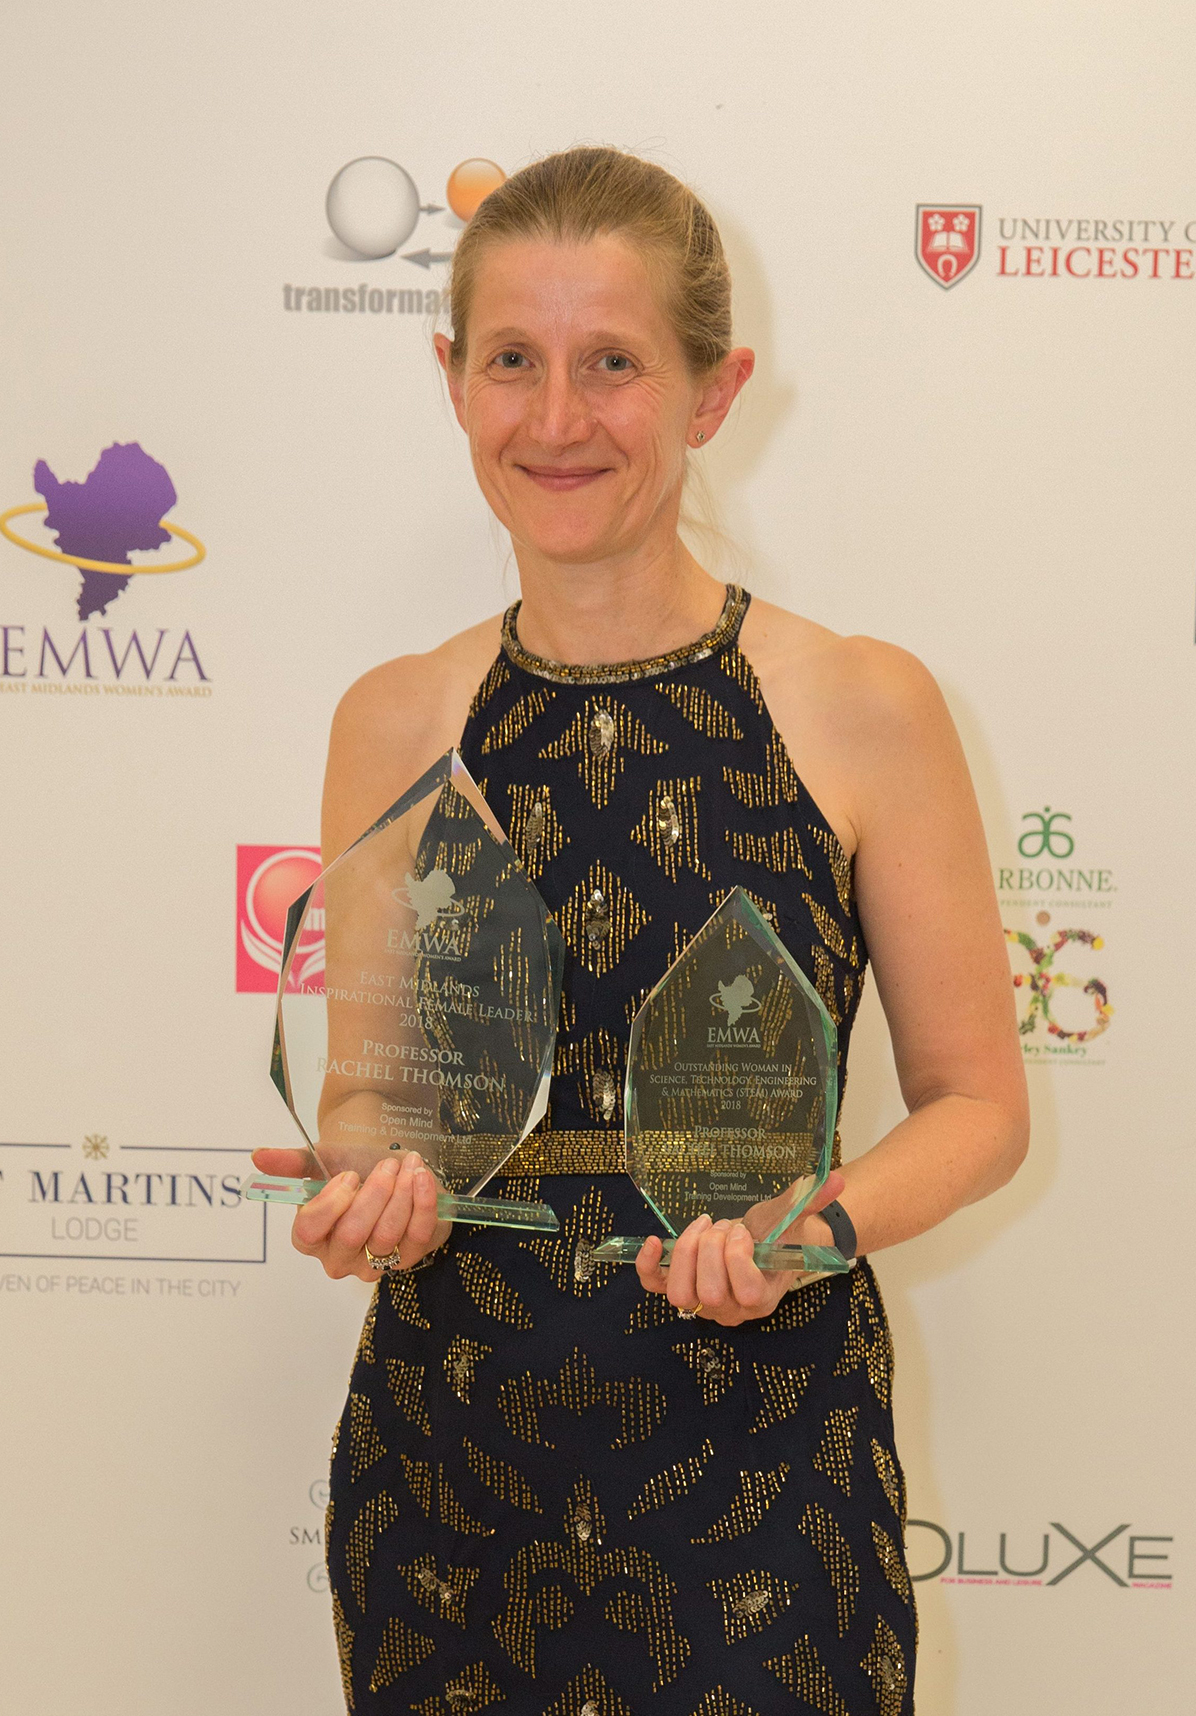 photo of Rachel Thomson with EMWA awards